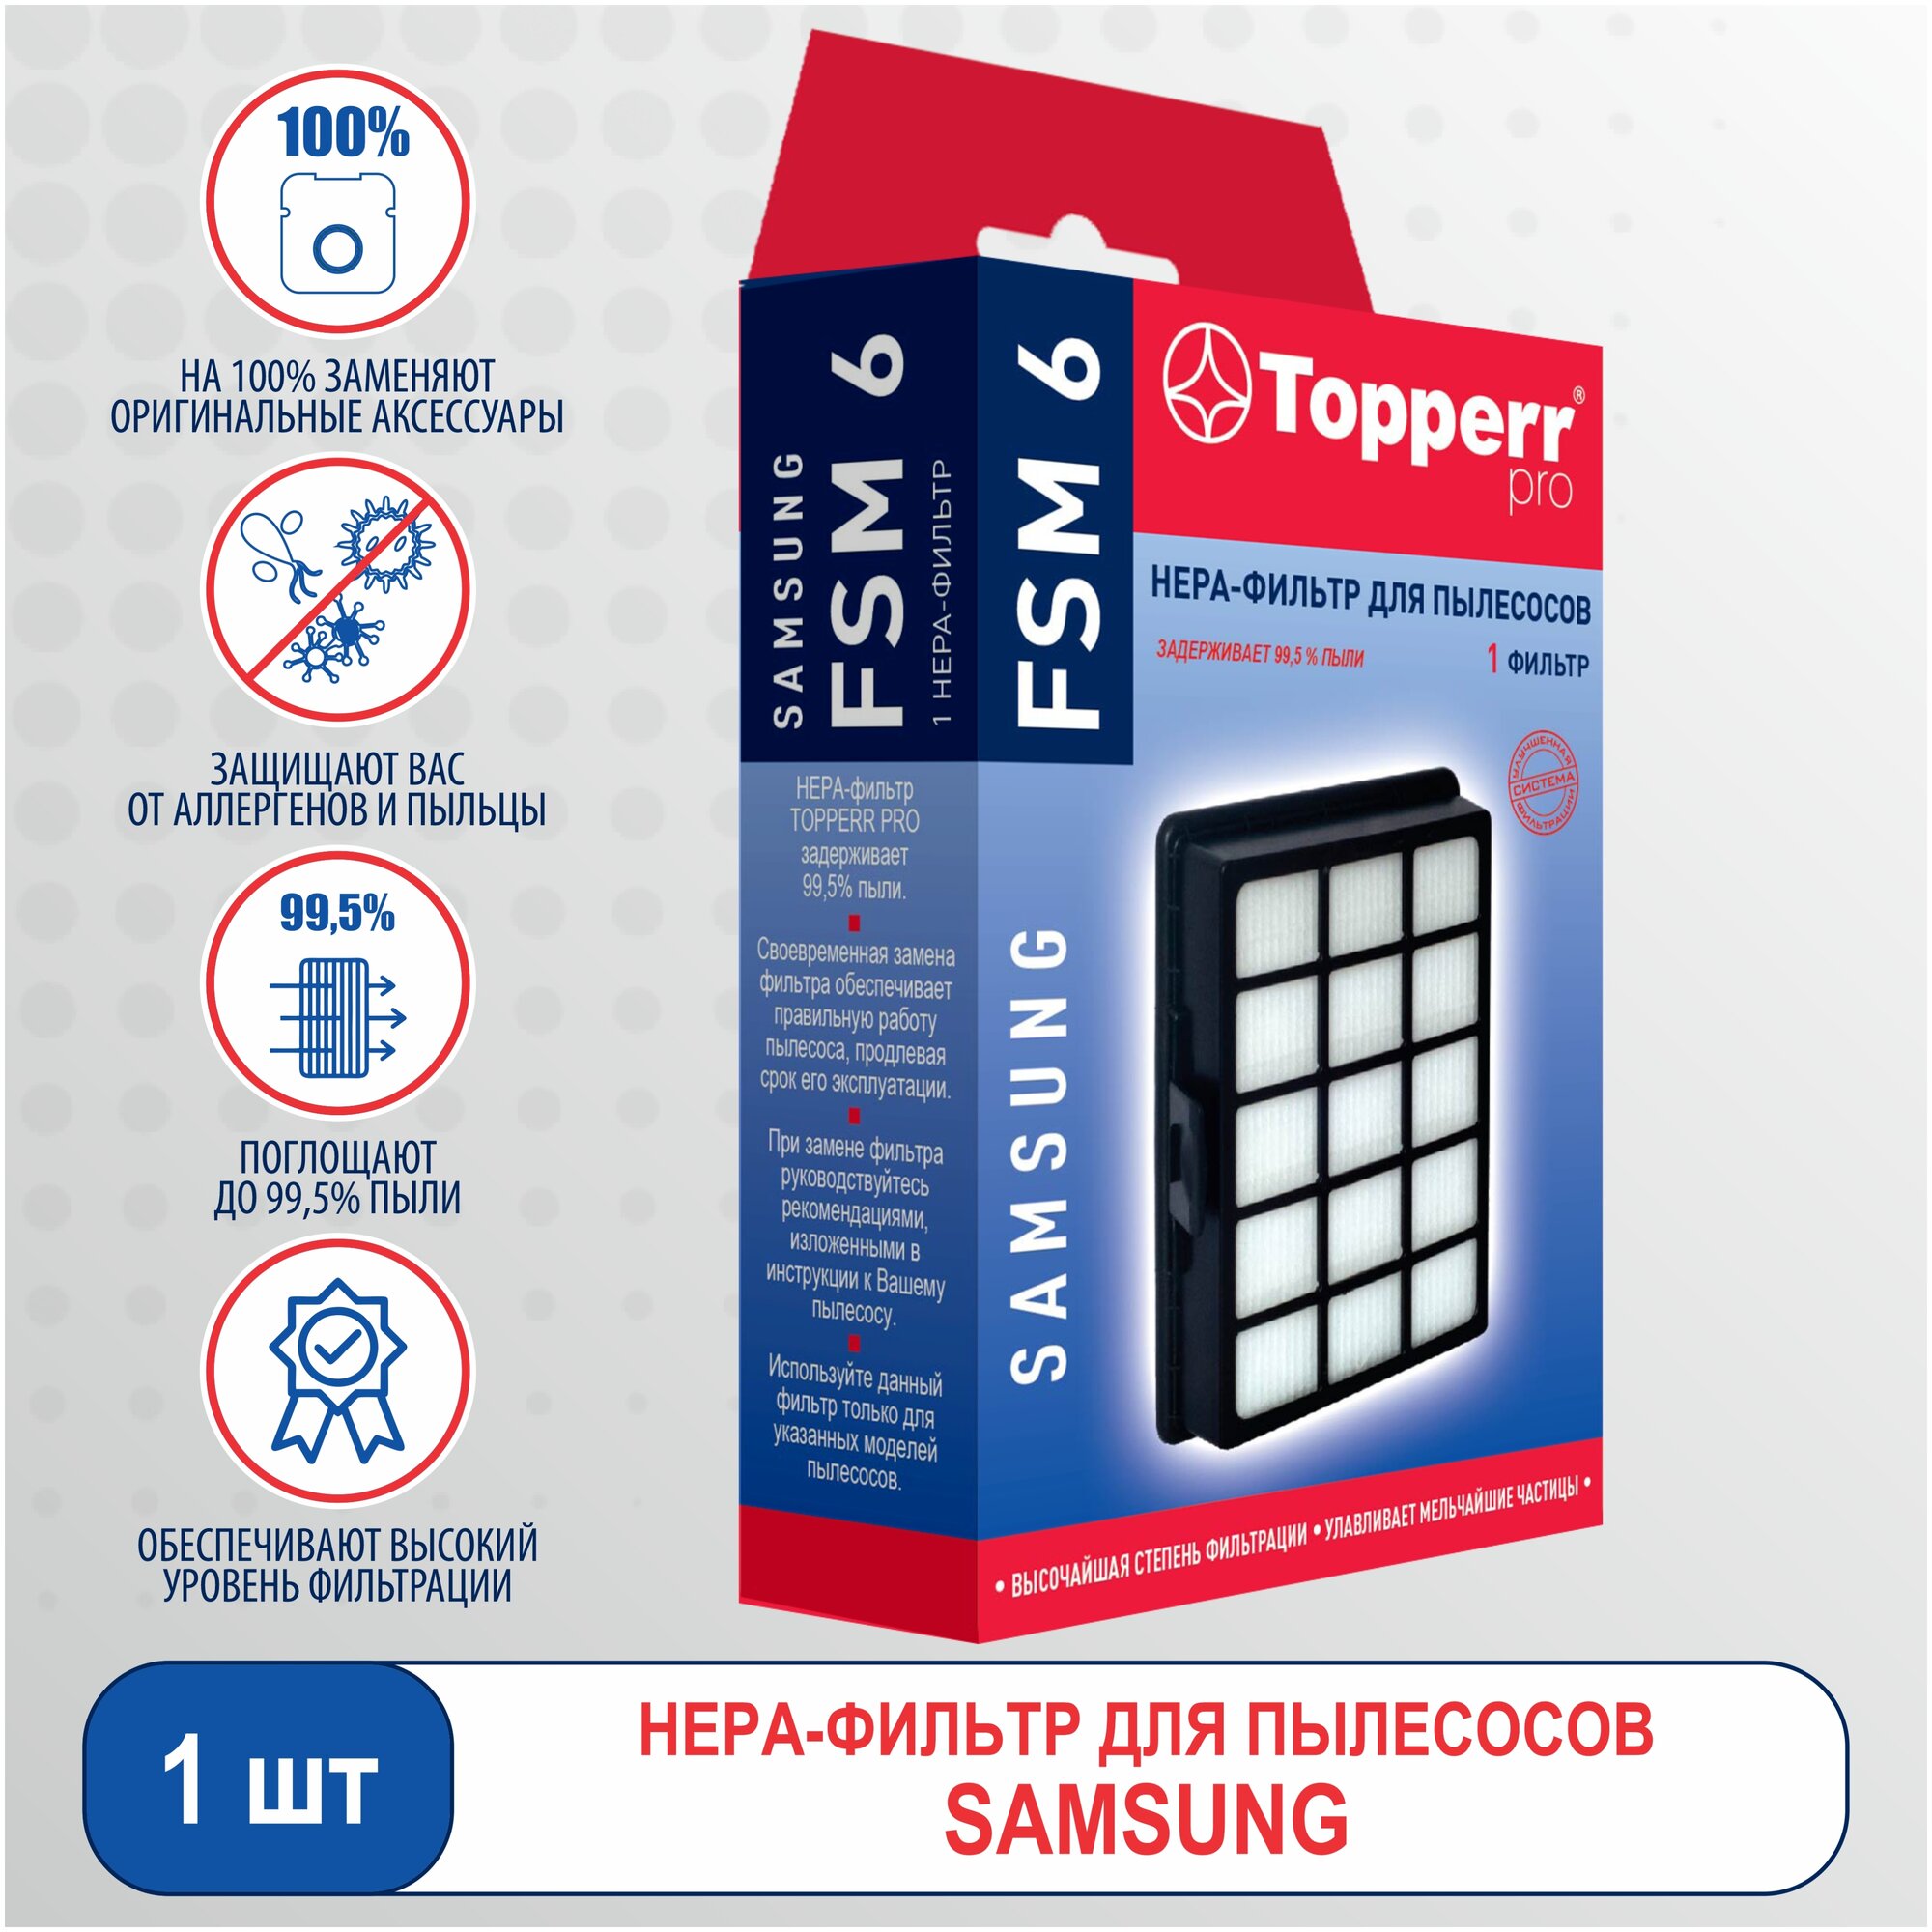 Topperr HEPA-фильтр FSM 6